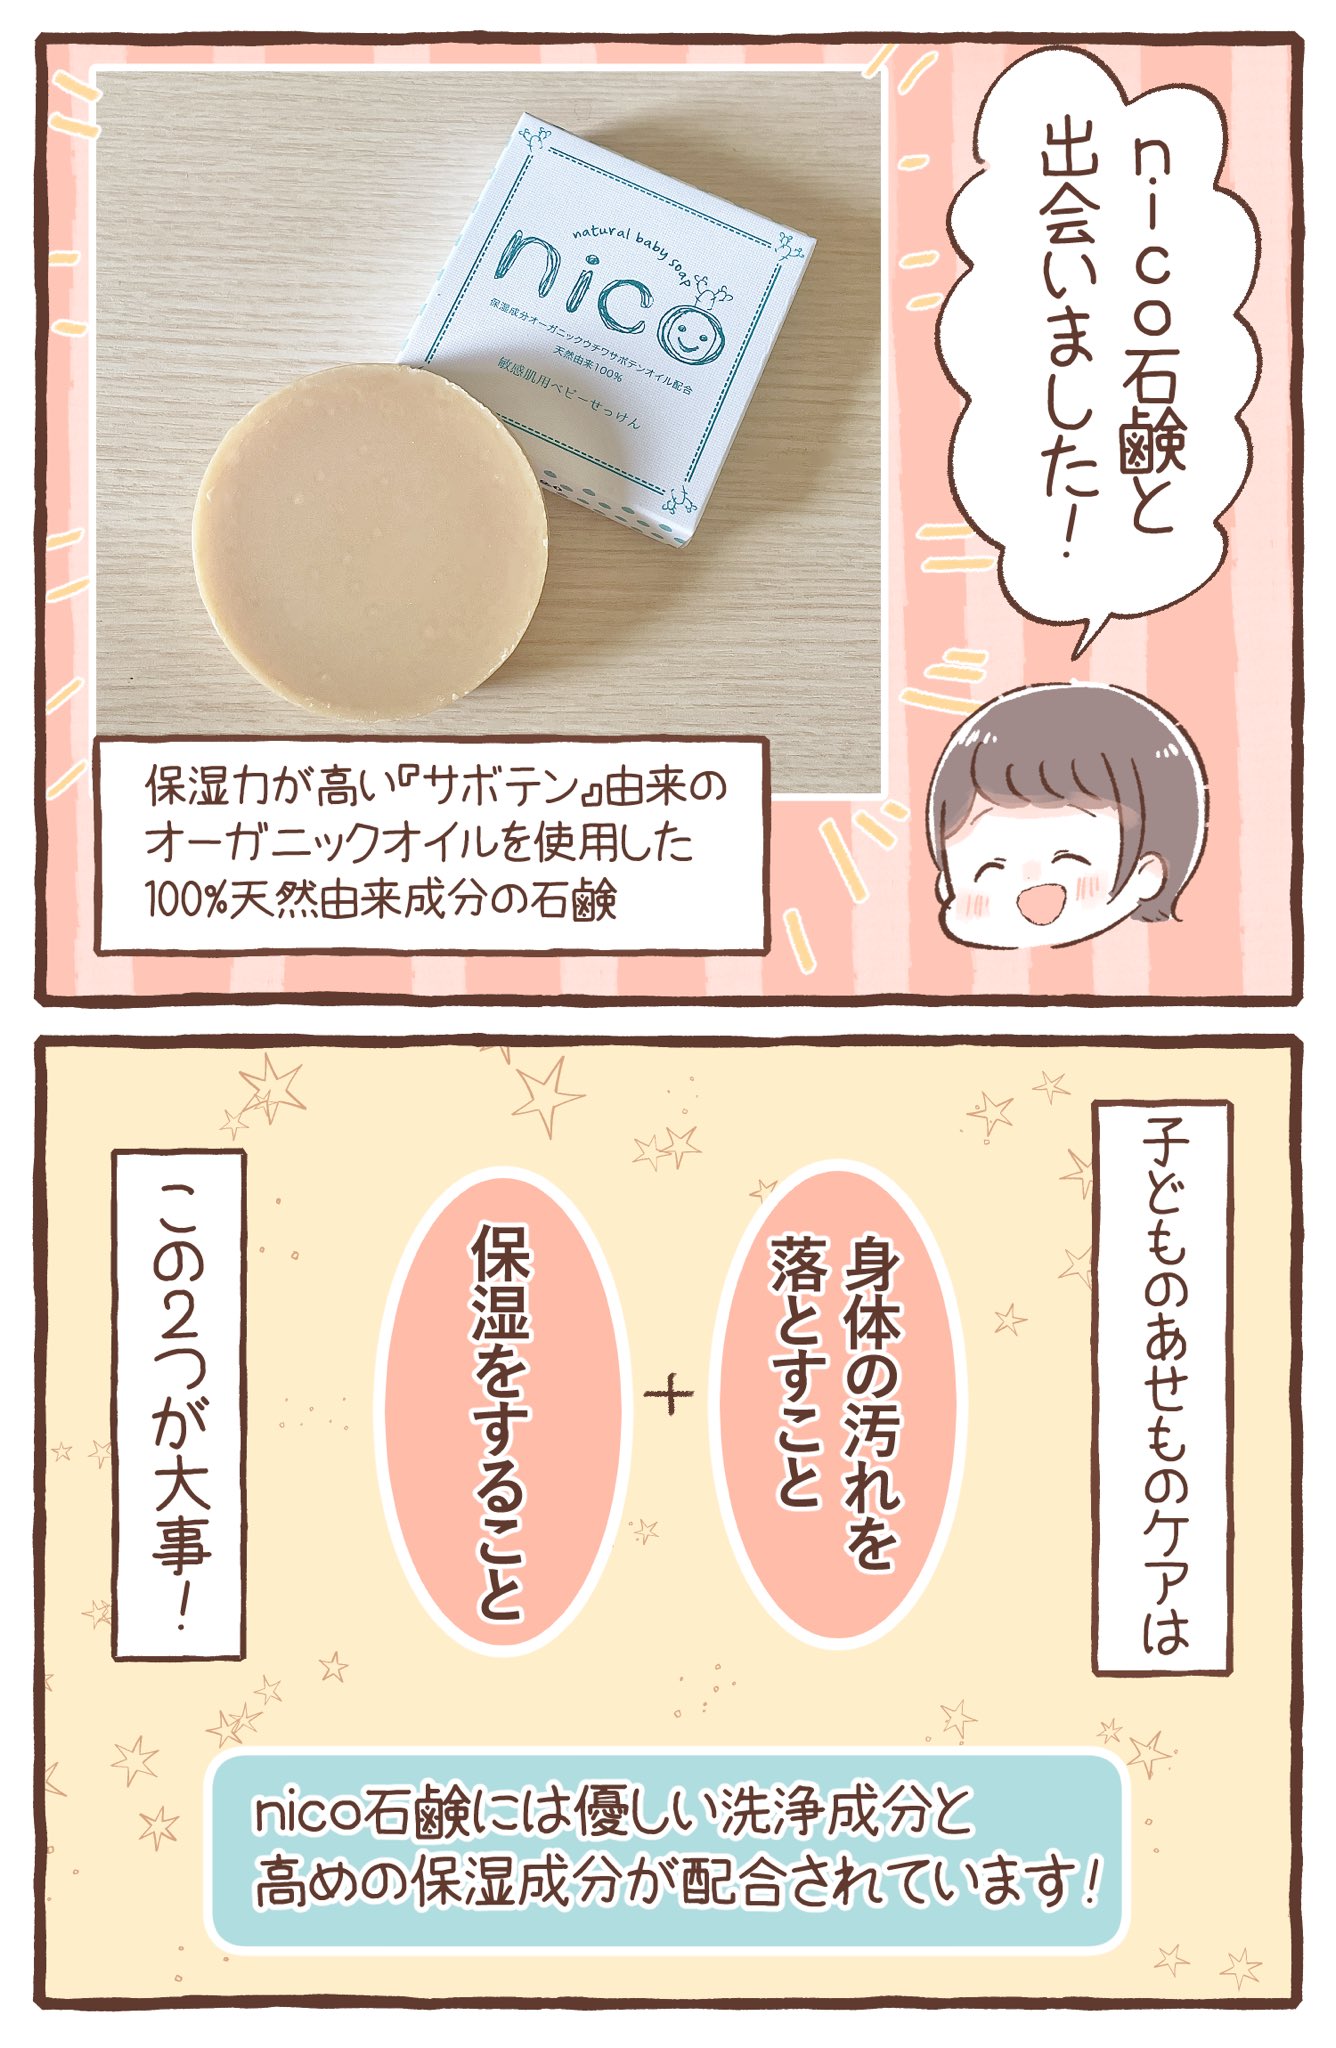 nico石鹸 - Twitter Search / Twitter